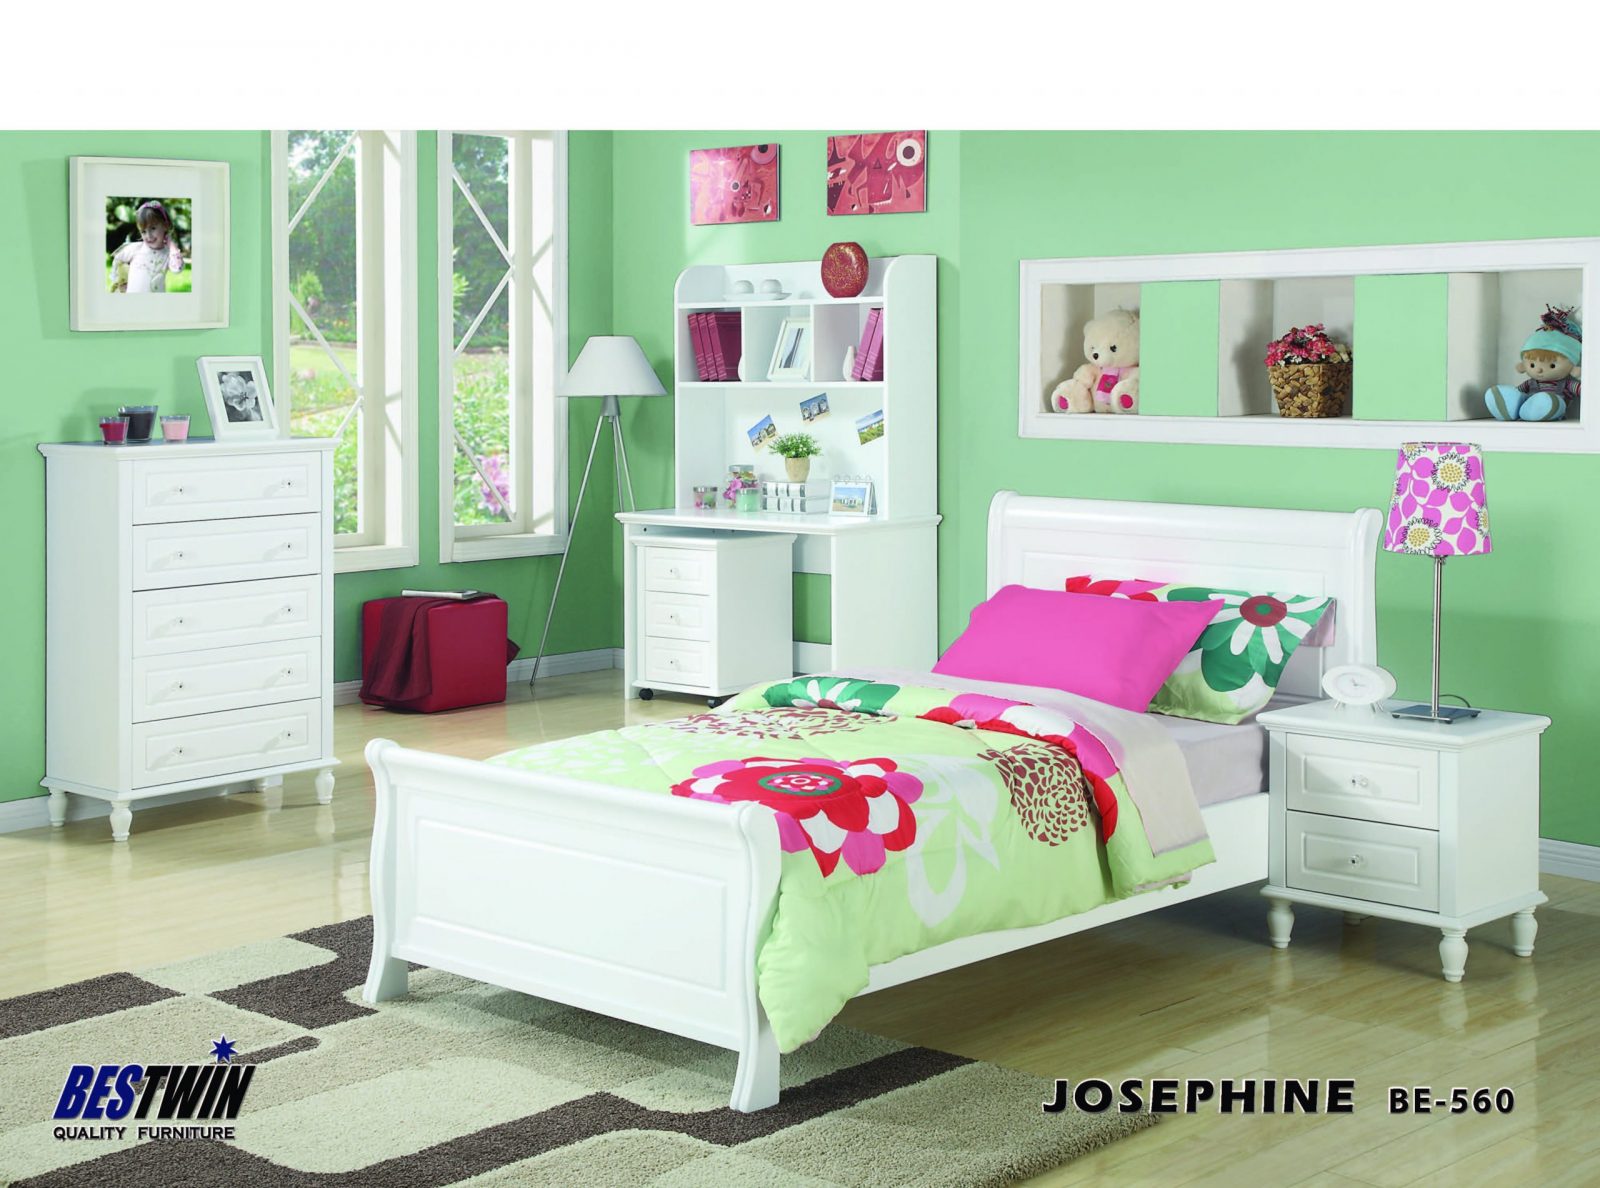 Josephine Bed Frame